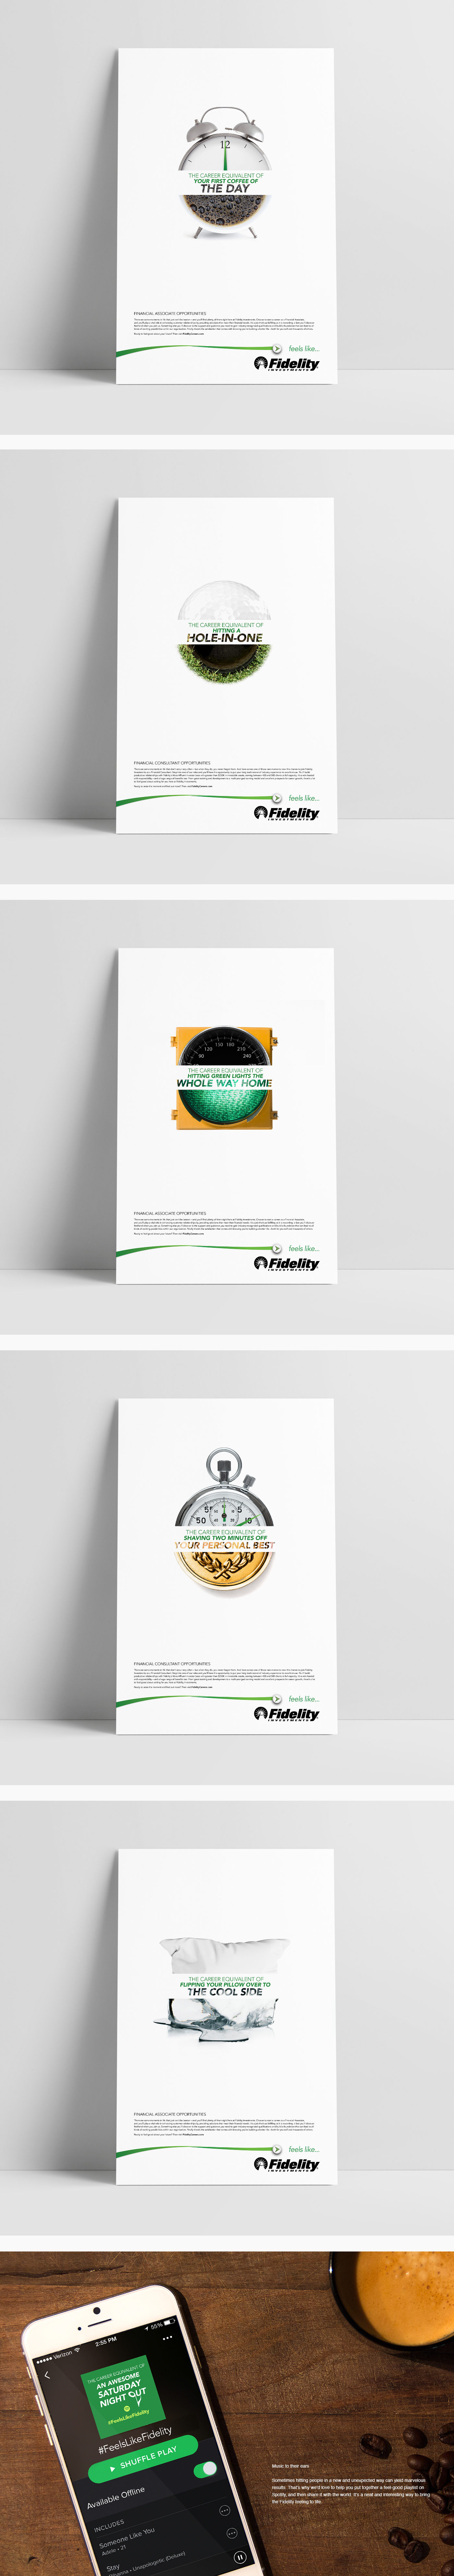 fidelity Finance Service moodboard art direction  campaign